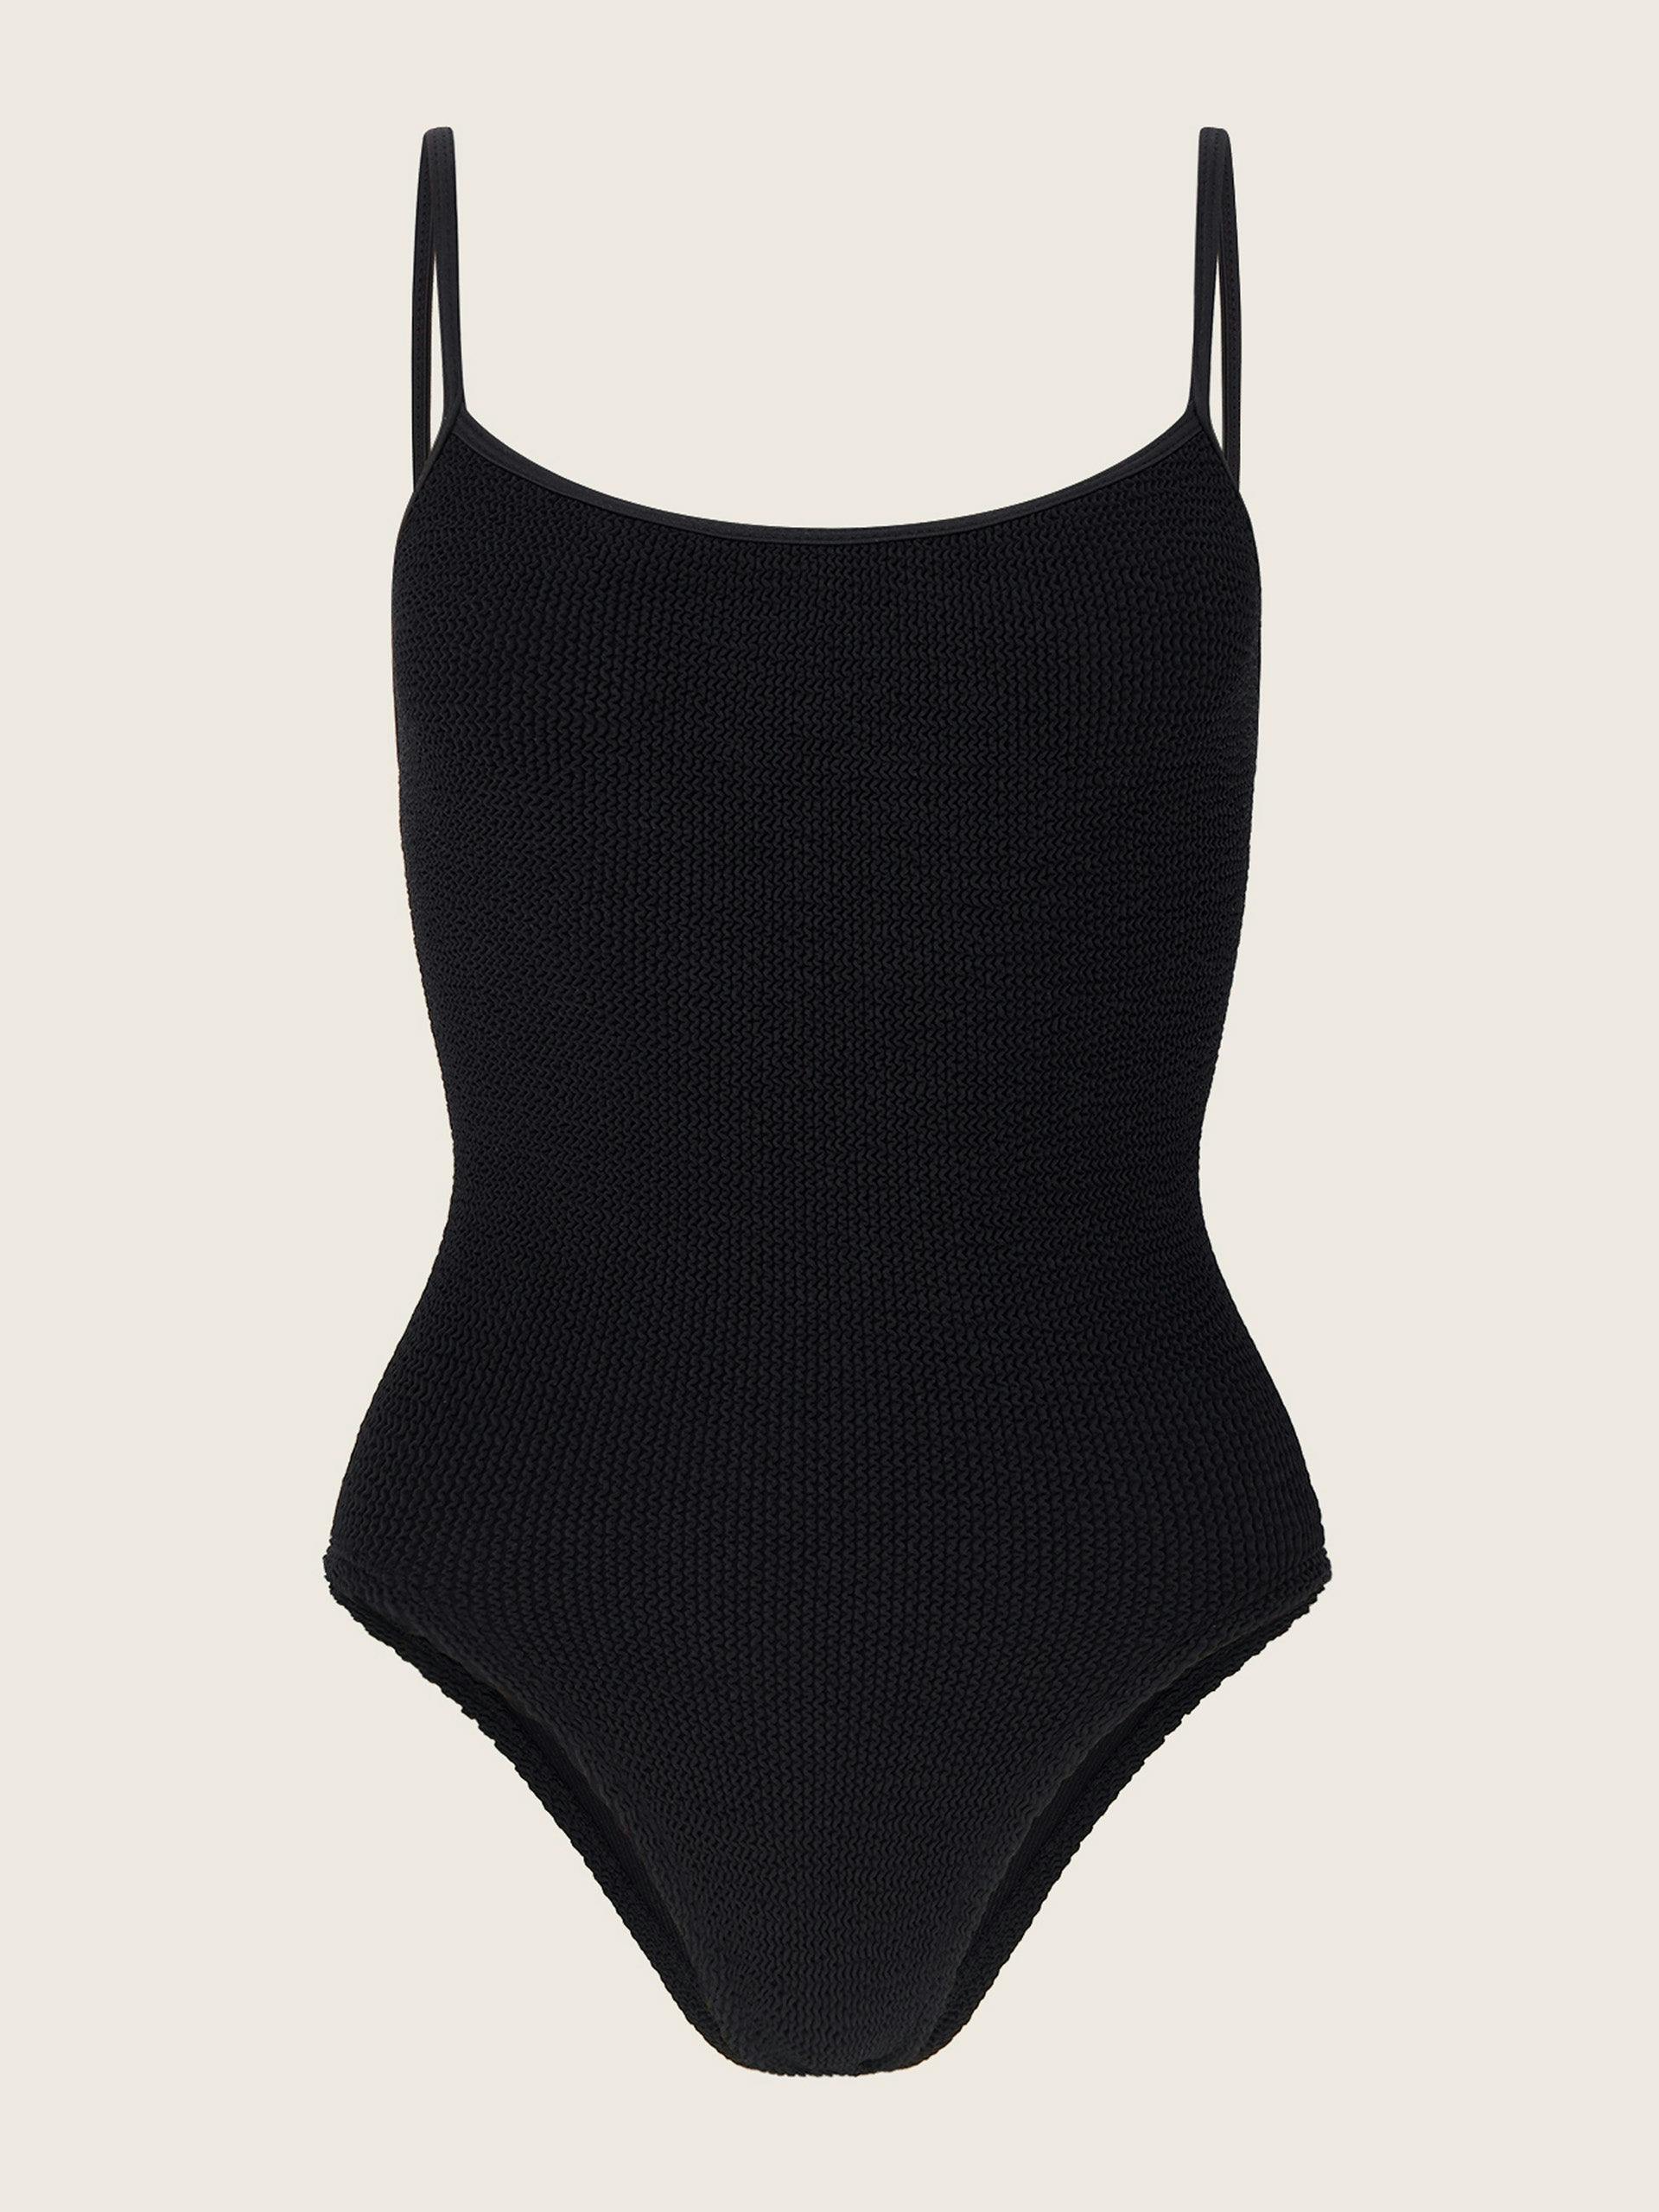 Black spaghetti strap Pamela swimsuit